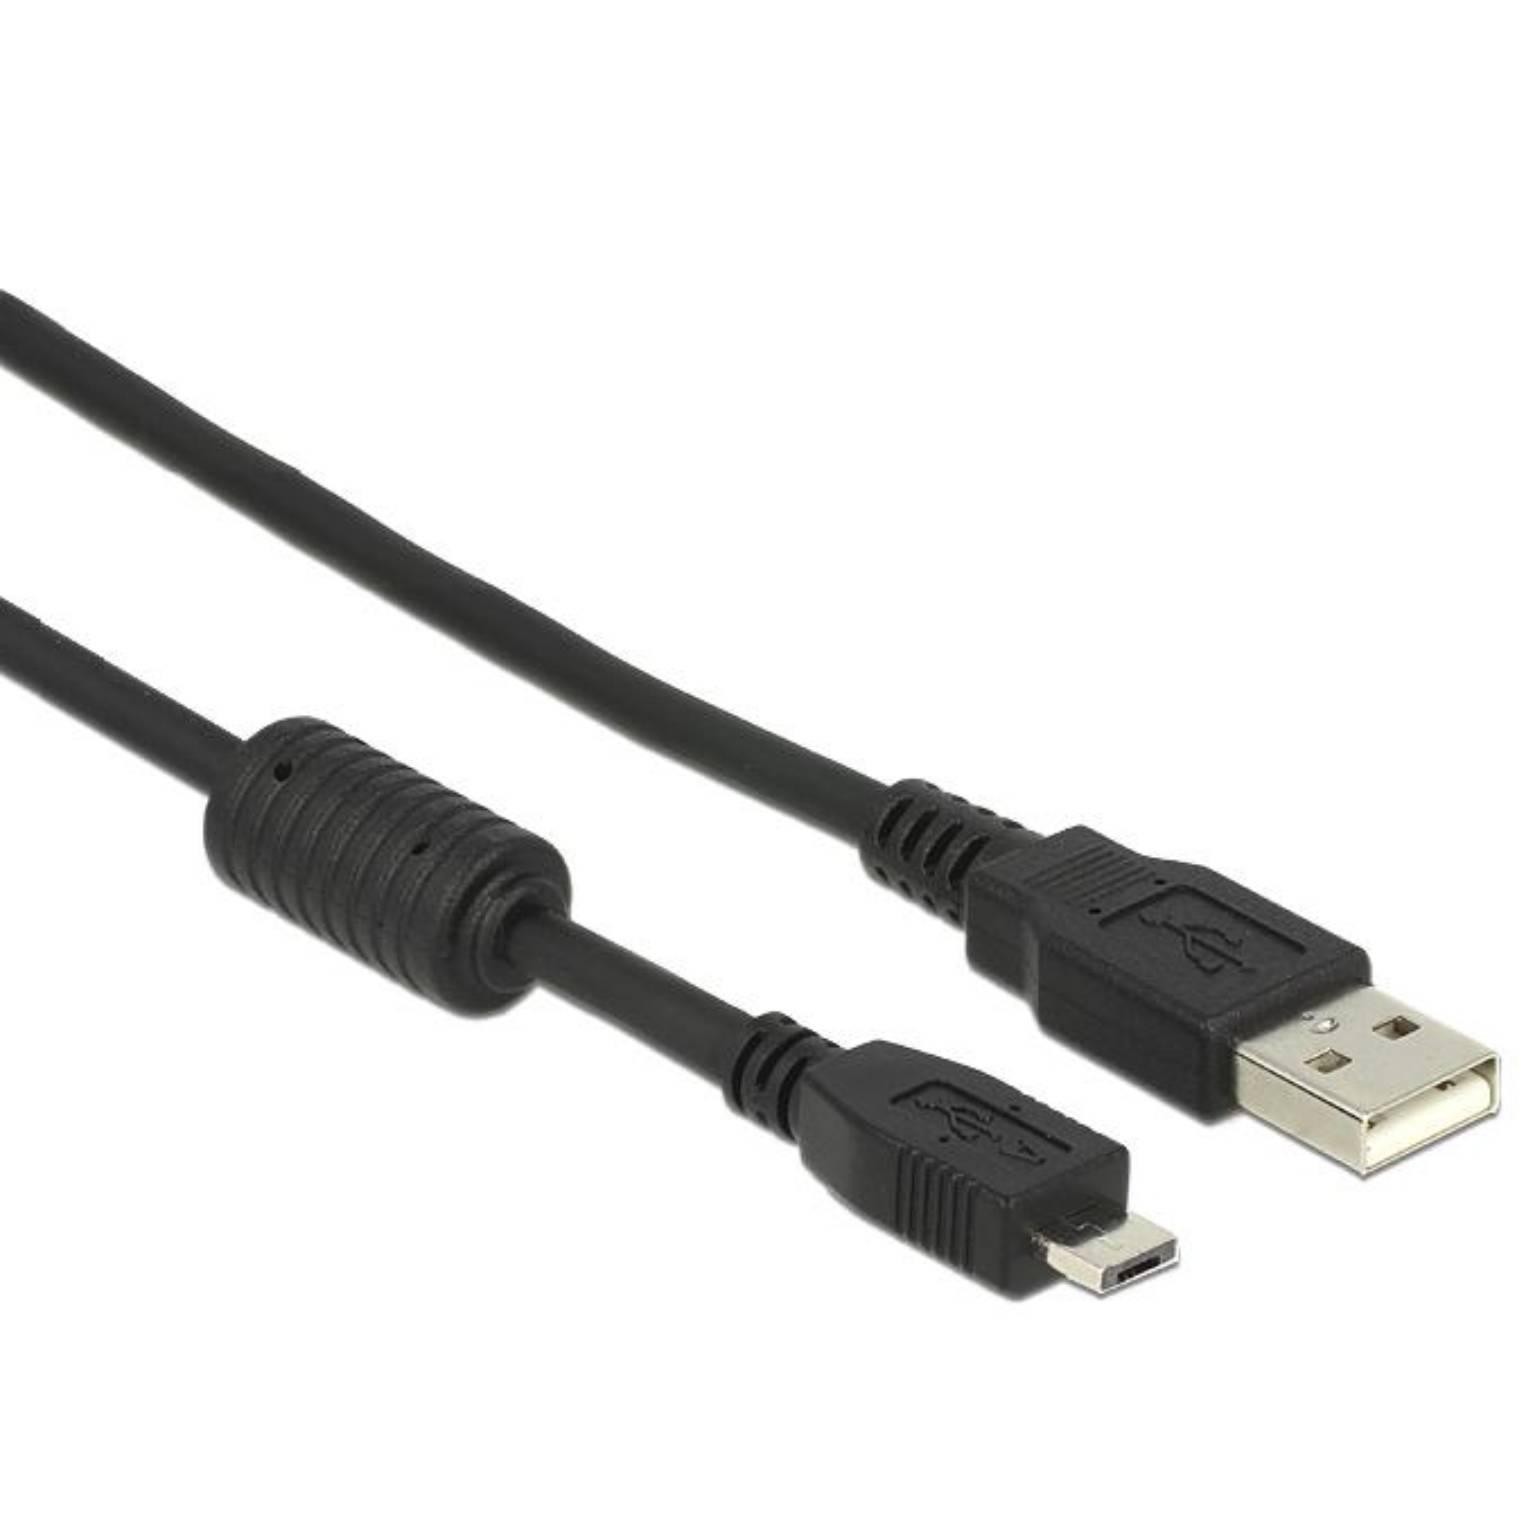 Image of DeLOCK USB 2.0 Cable - 1.0m